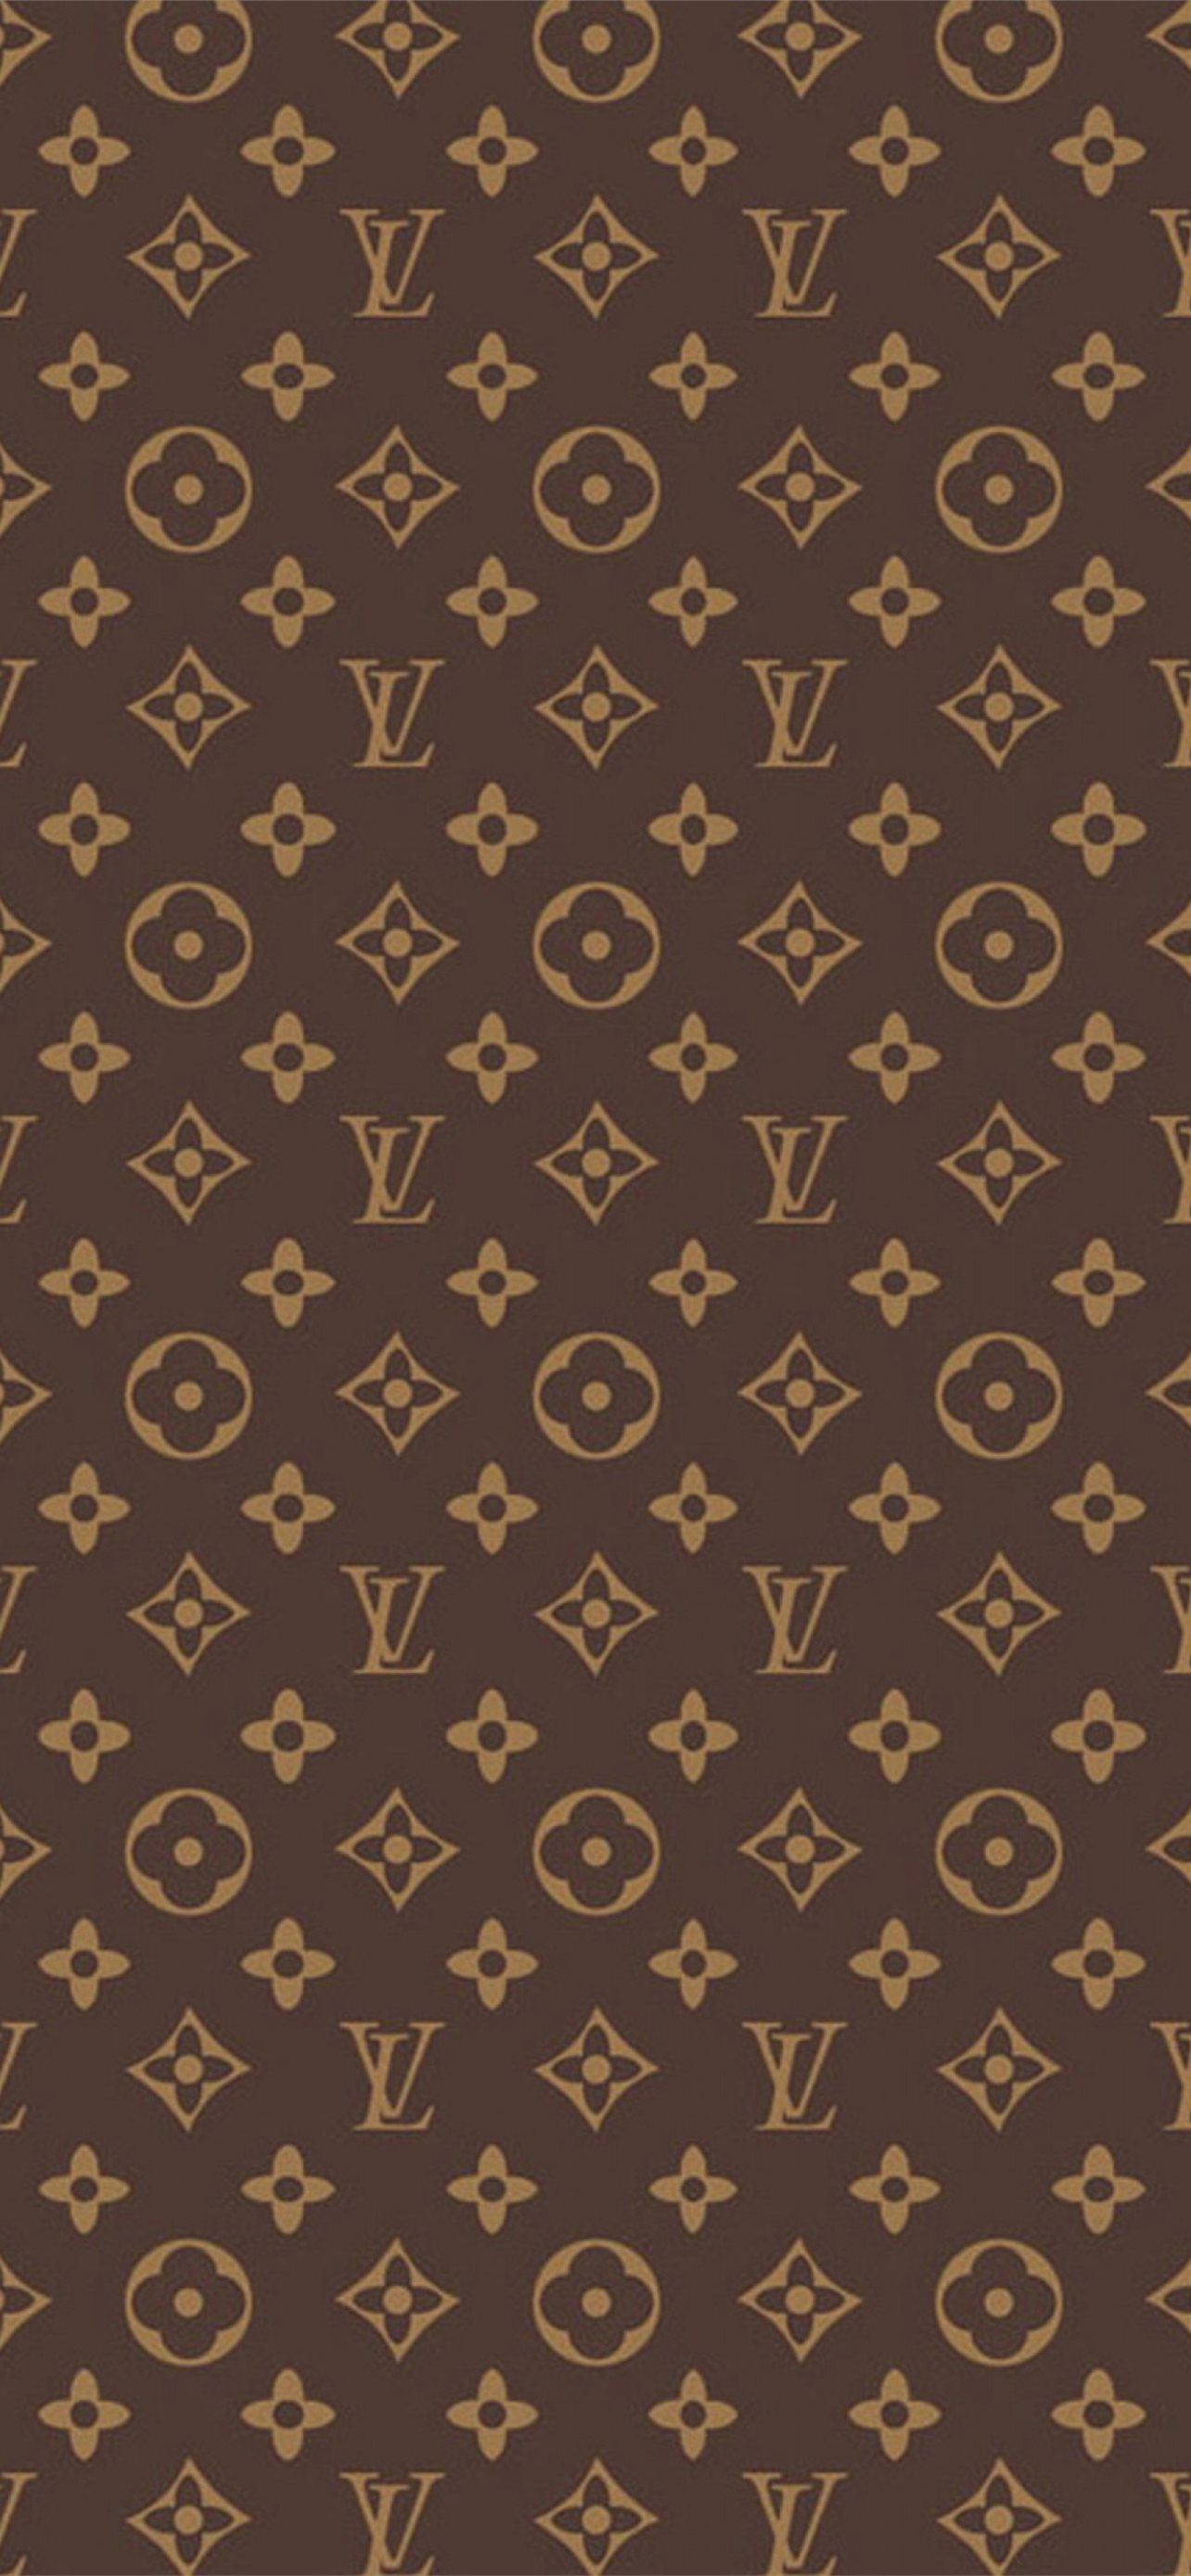 Best Coco Chanel Iphone Hd Wallpapers Ilikewallpaper